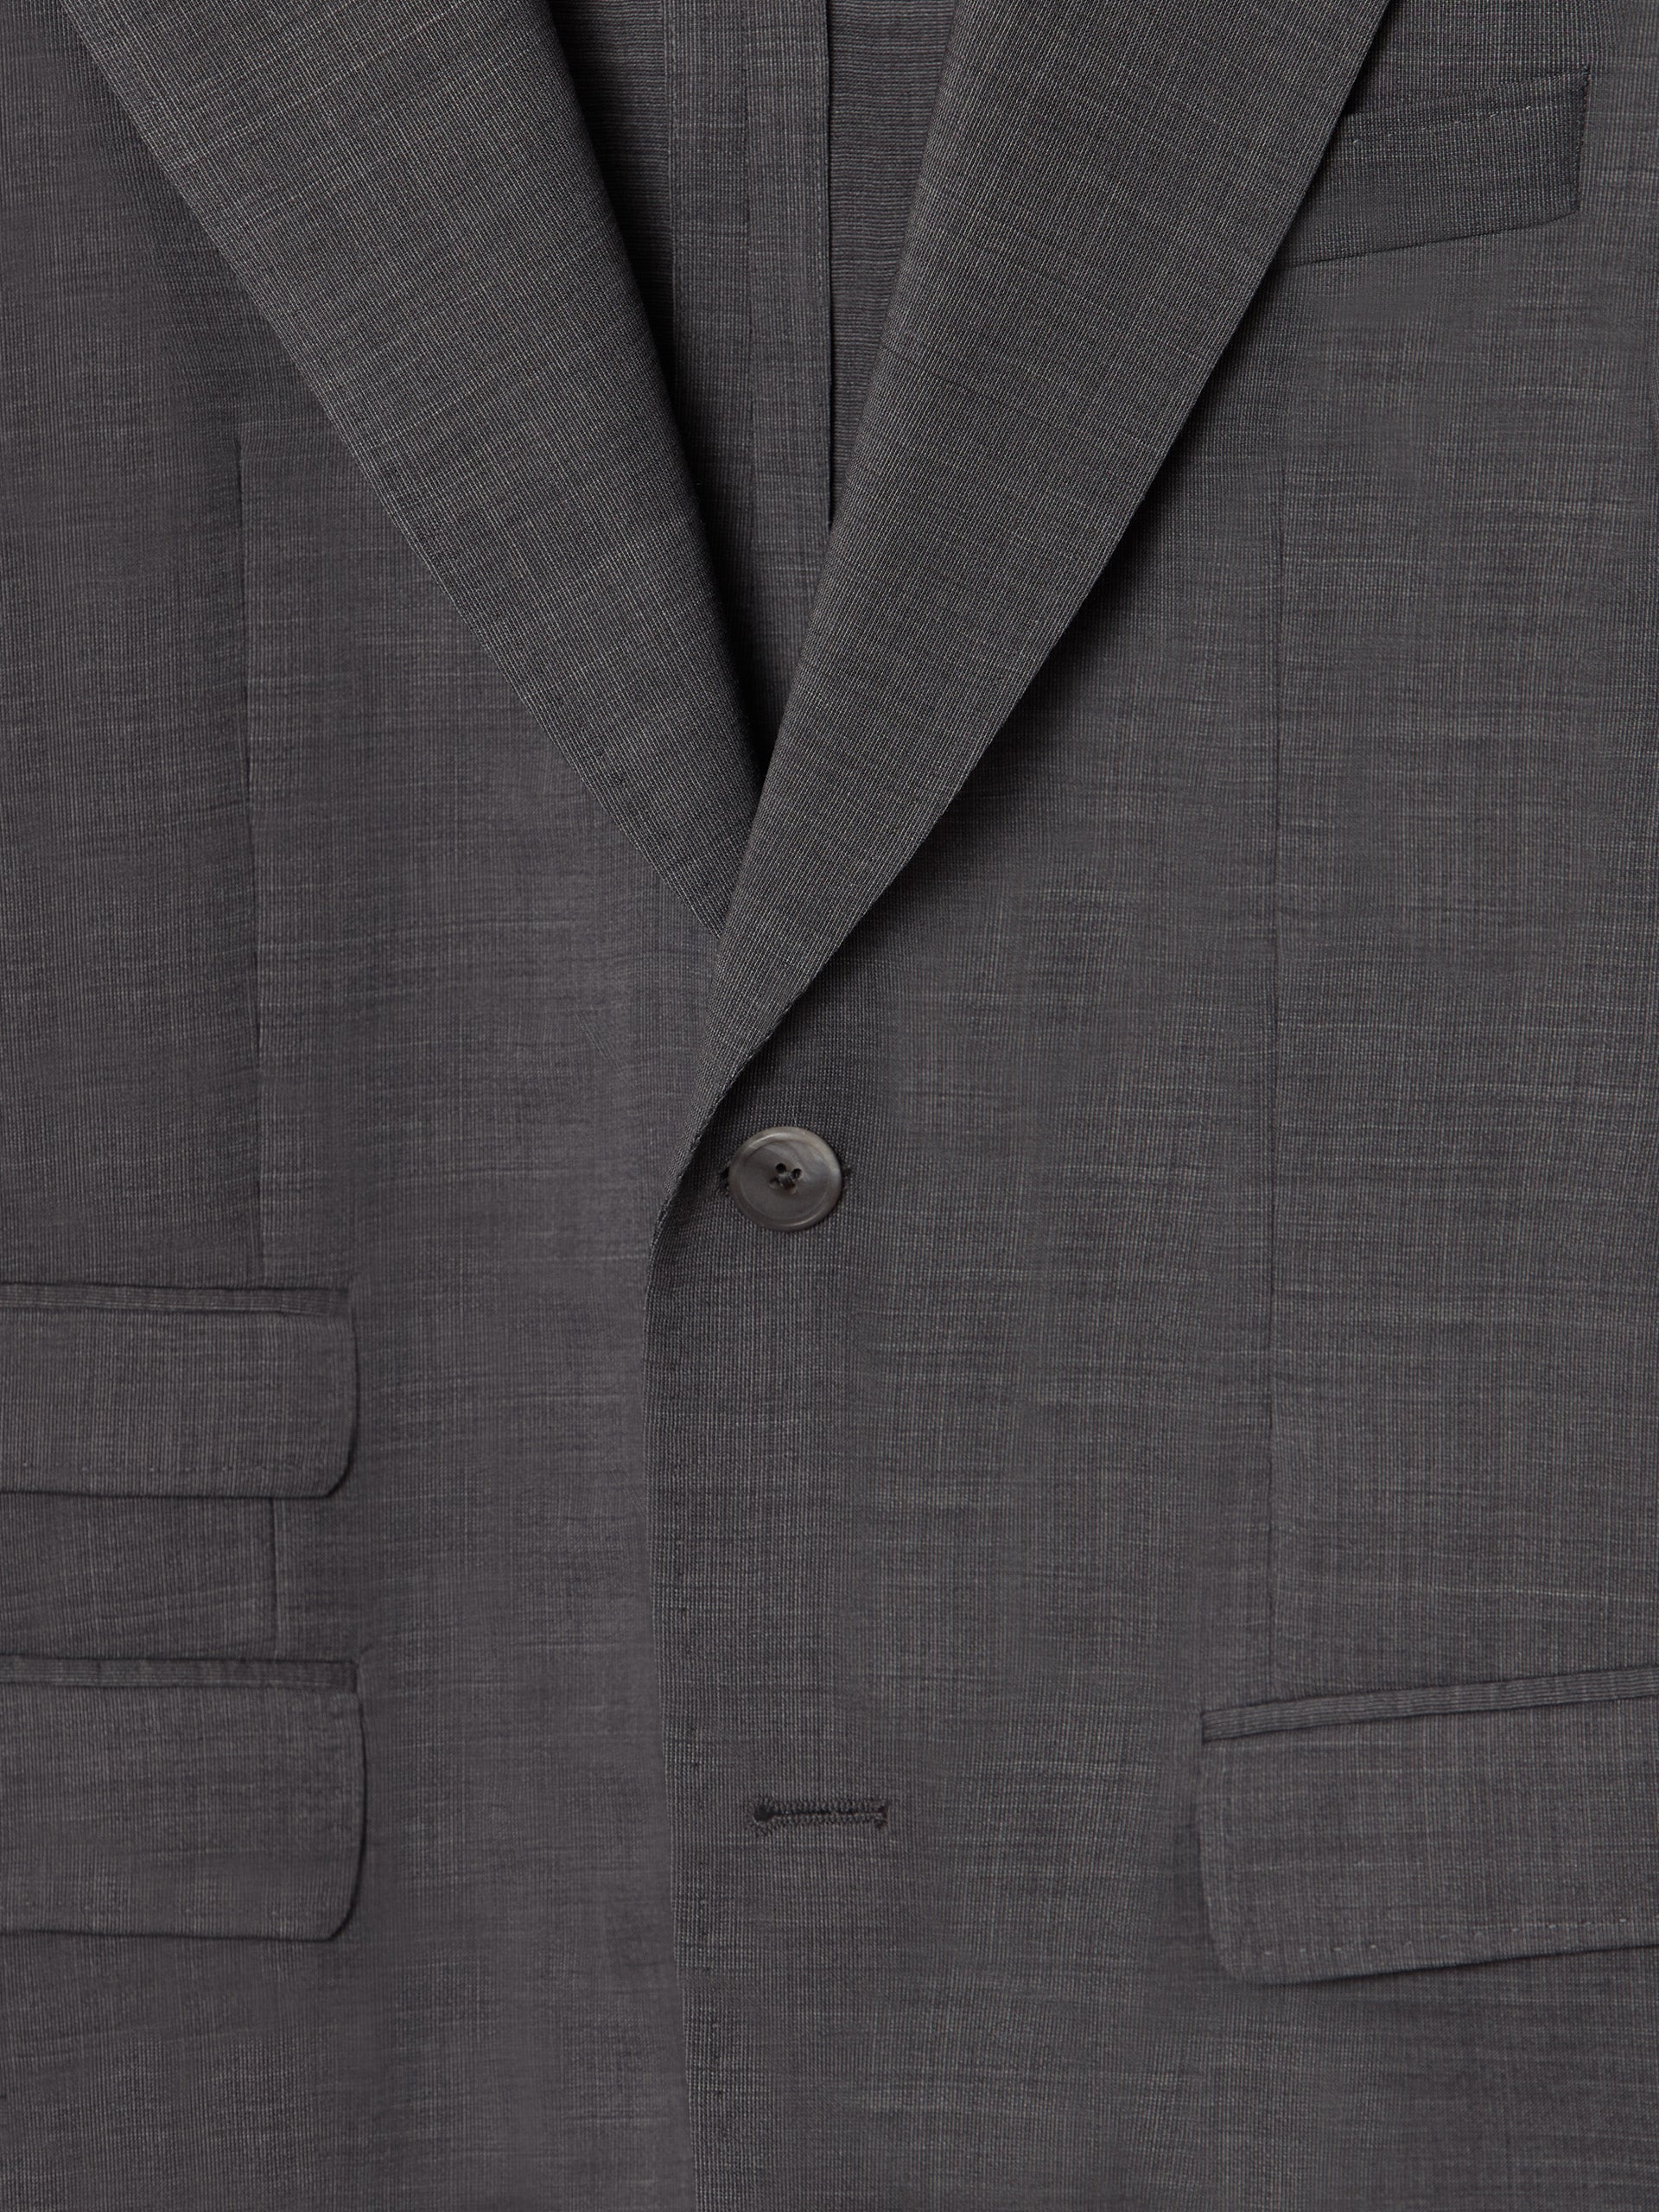 Veste de costume fil à fil grise